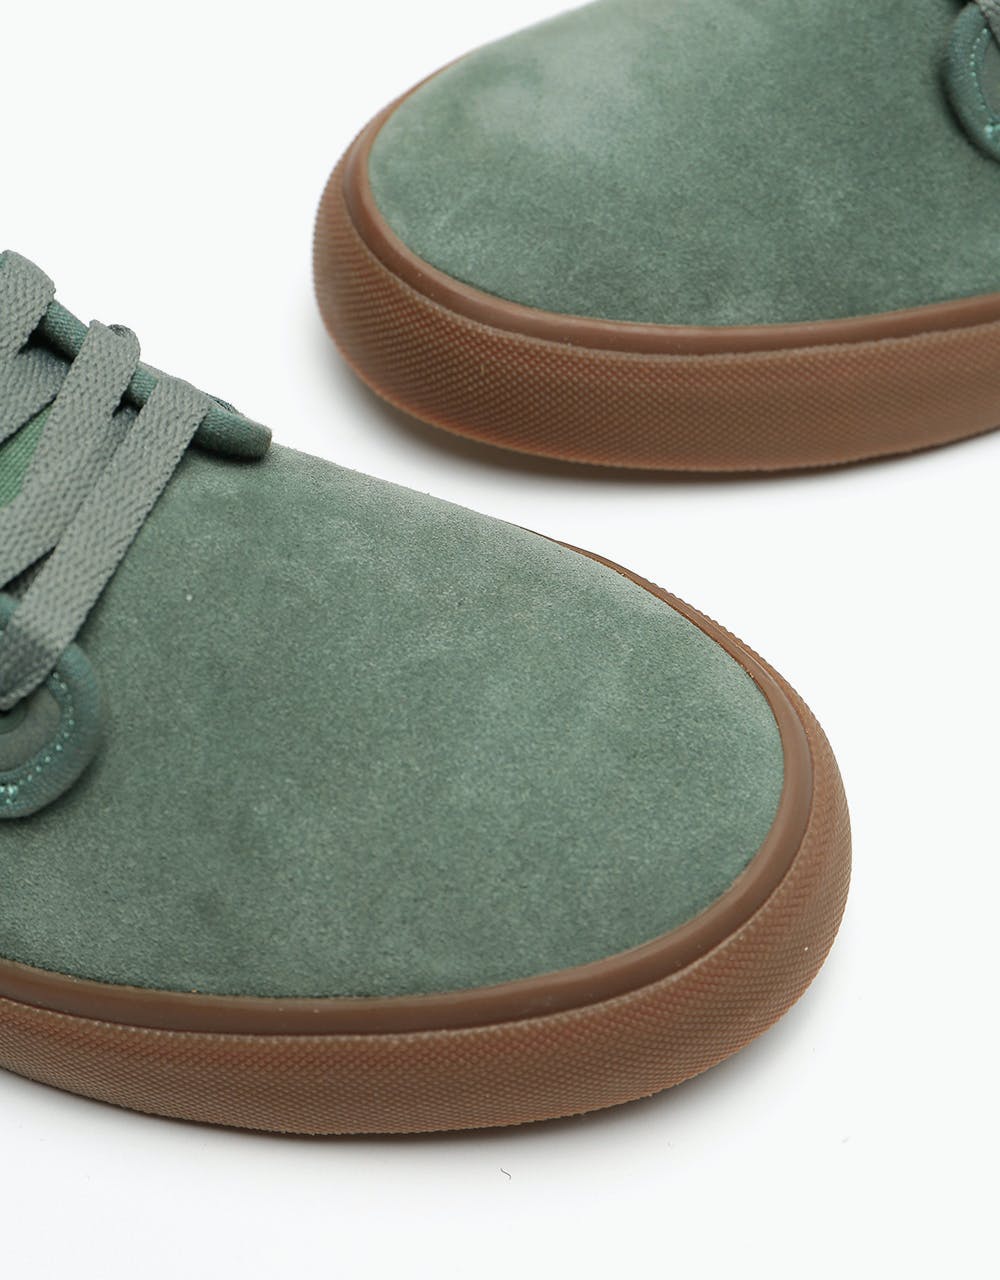 Emerica Wino Standard Skate Shoes - Green/Gum